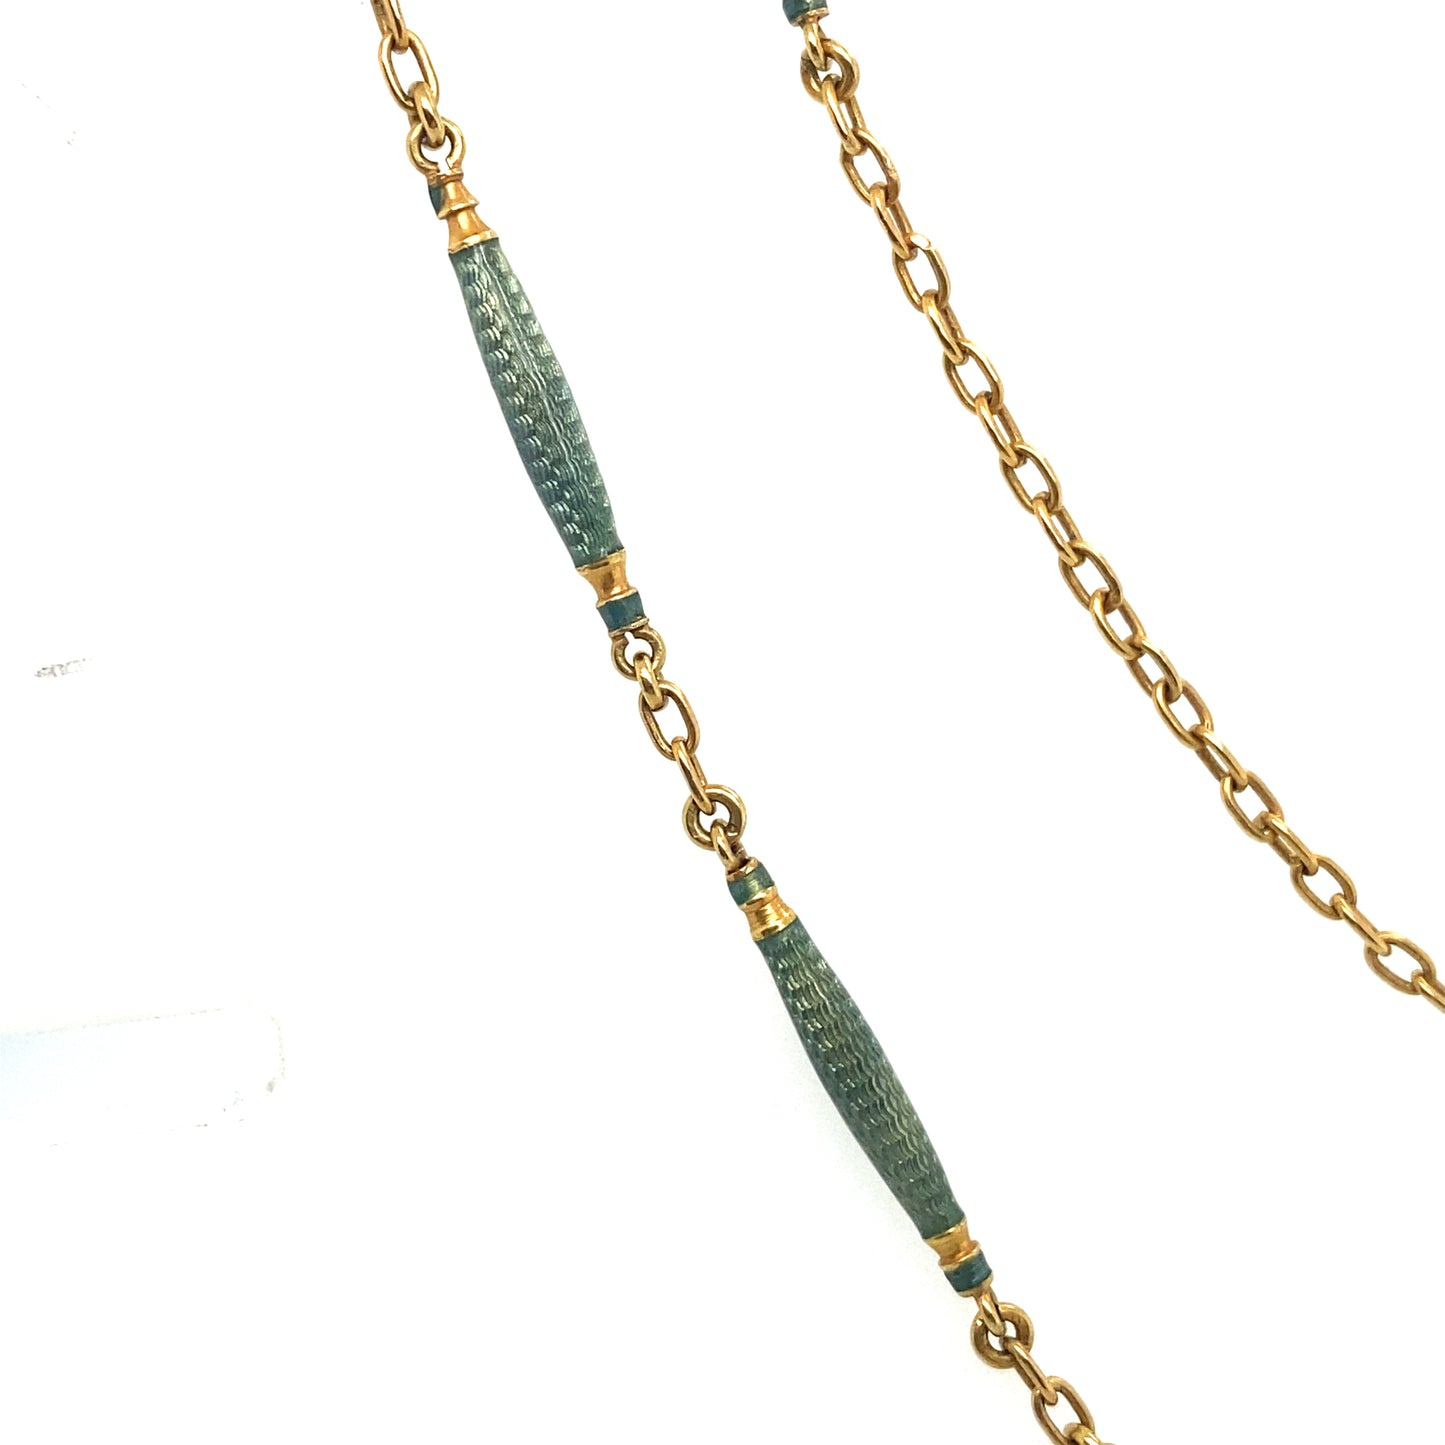 Circa 1890s Wilhelm Müller Guilloche Enamel Chain Necklace in 18K Gold